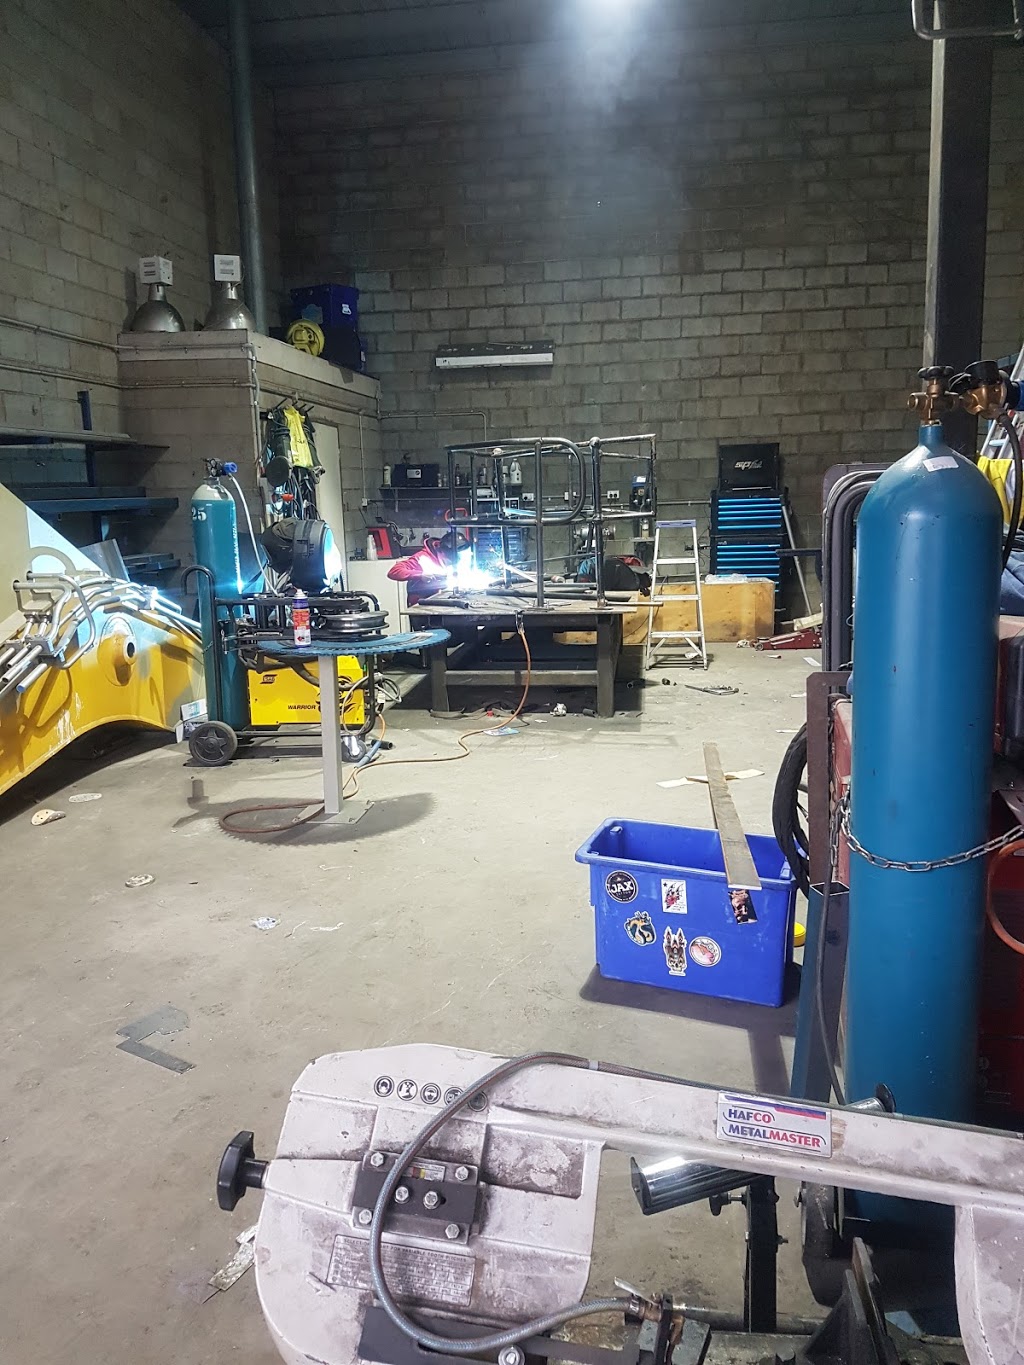 AMC Plant Repairs & Welding |  | 2/5 Box Ave, Wilberforce NSW 2756, Australia | 0488994496 OR +61 488 994 496